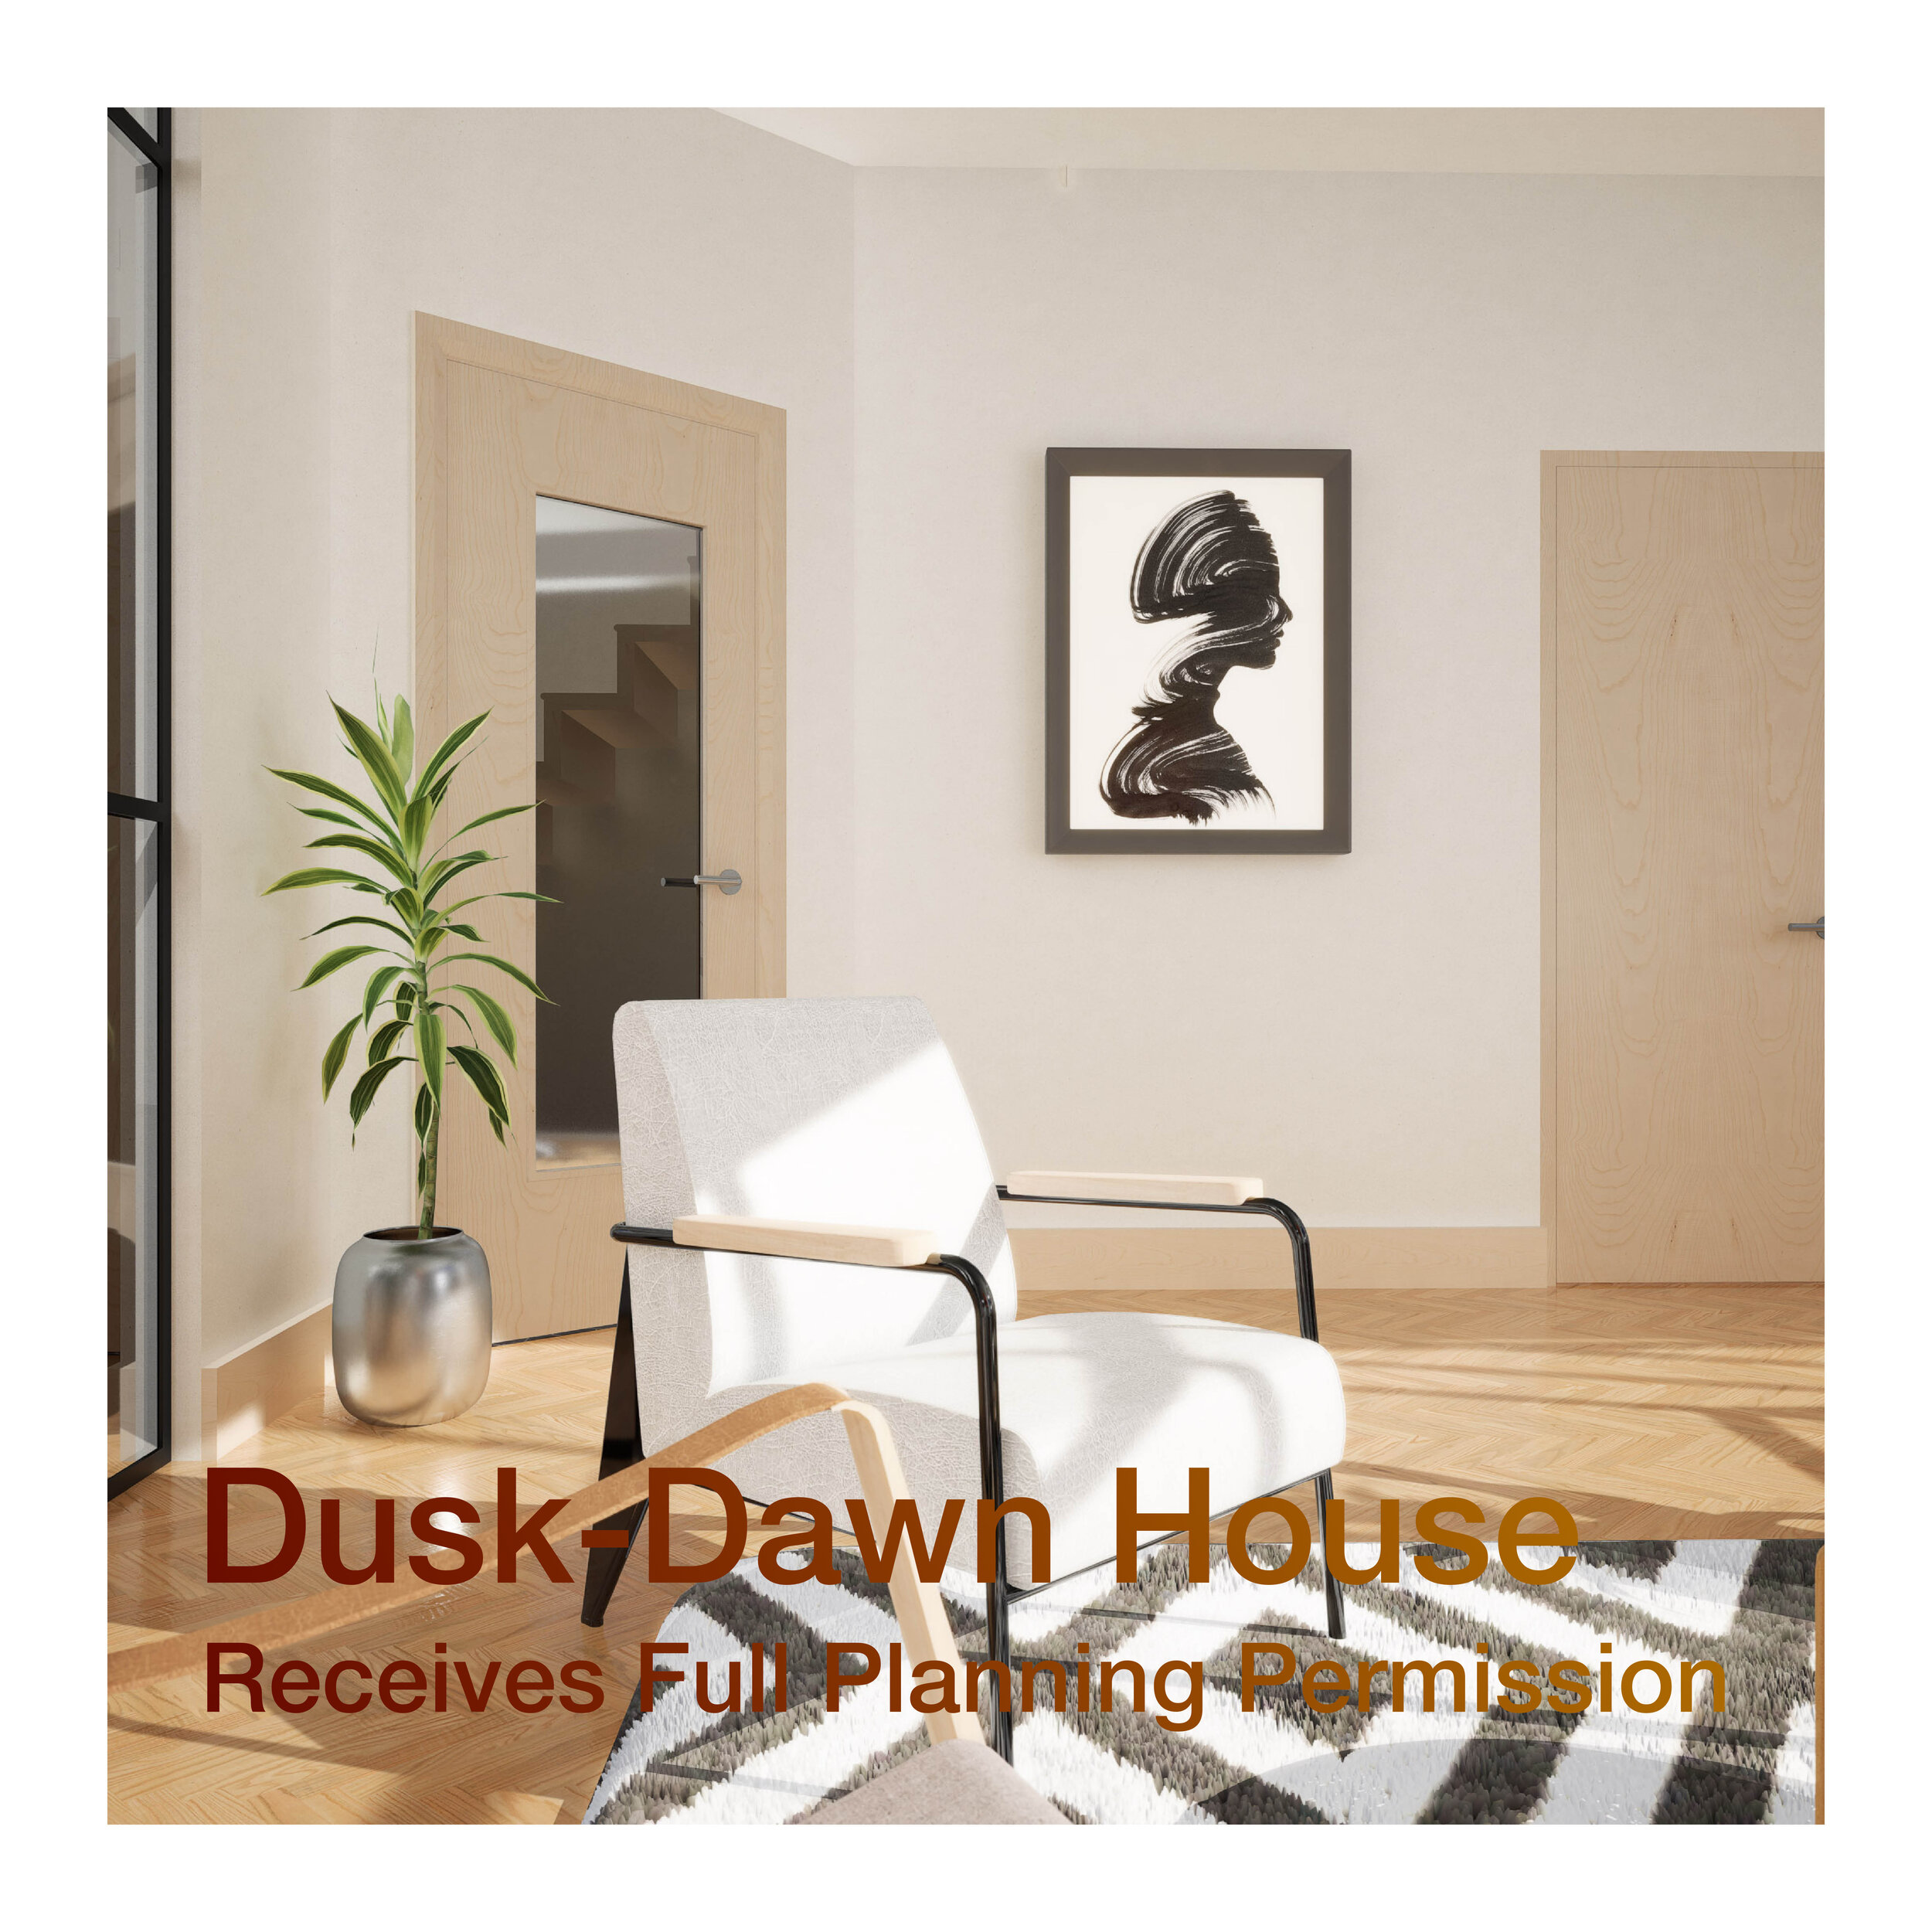 Dusk-Dawn House 7_Receives Full Planning Permission_Sustainable Cottingham Architects_Samuel Kendall Associates